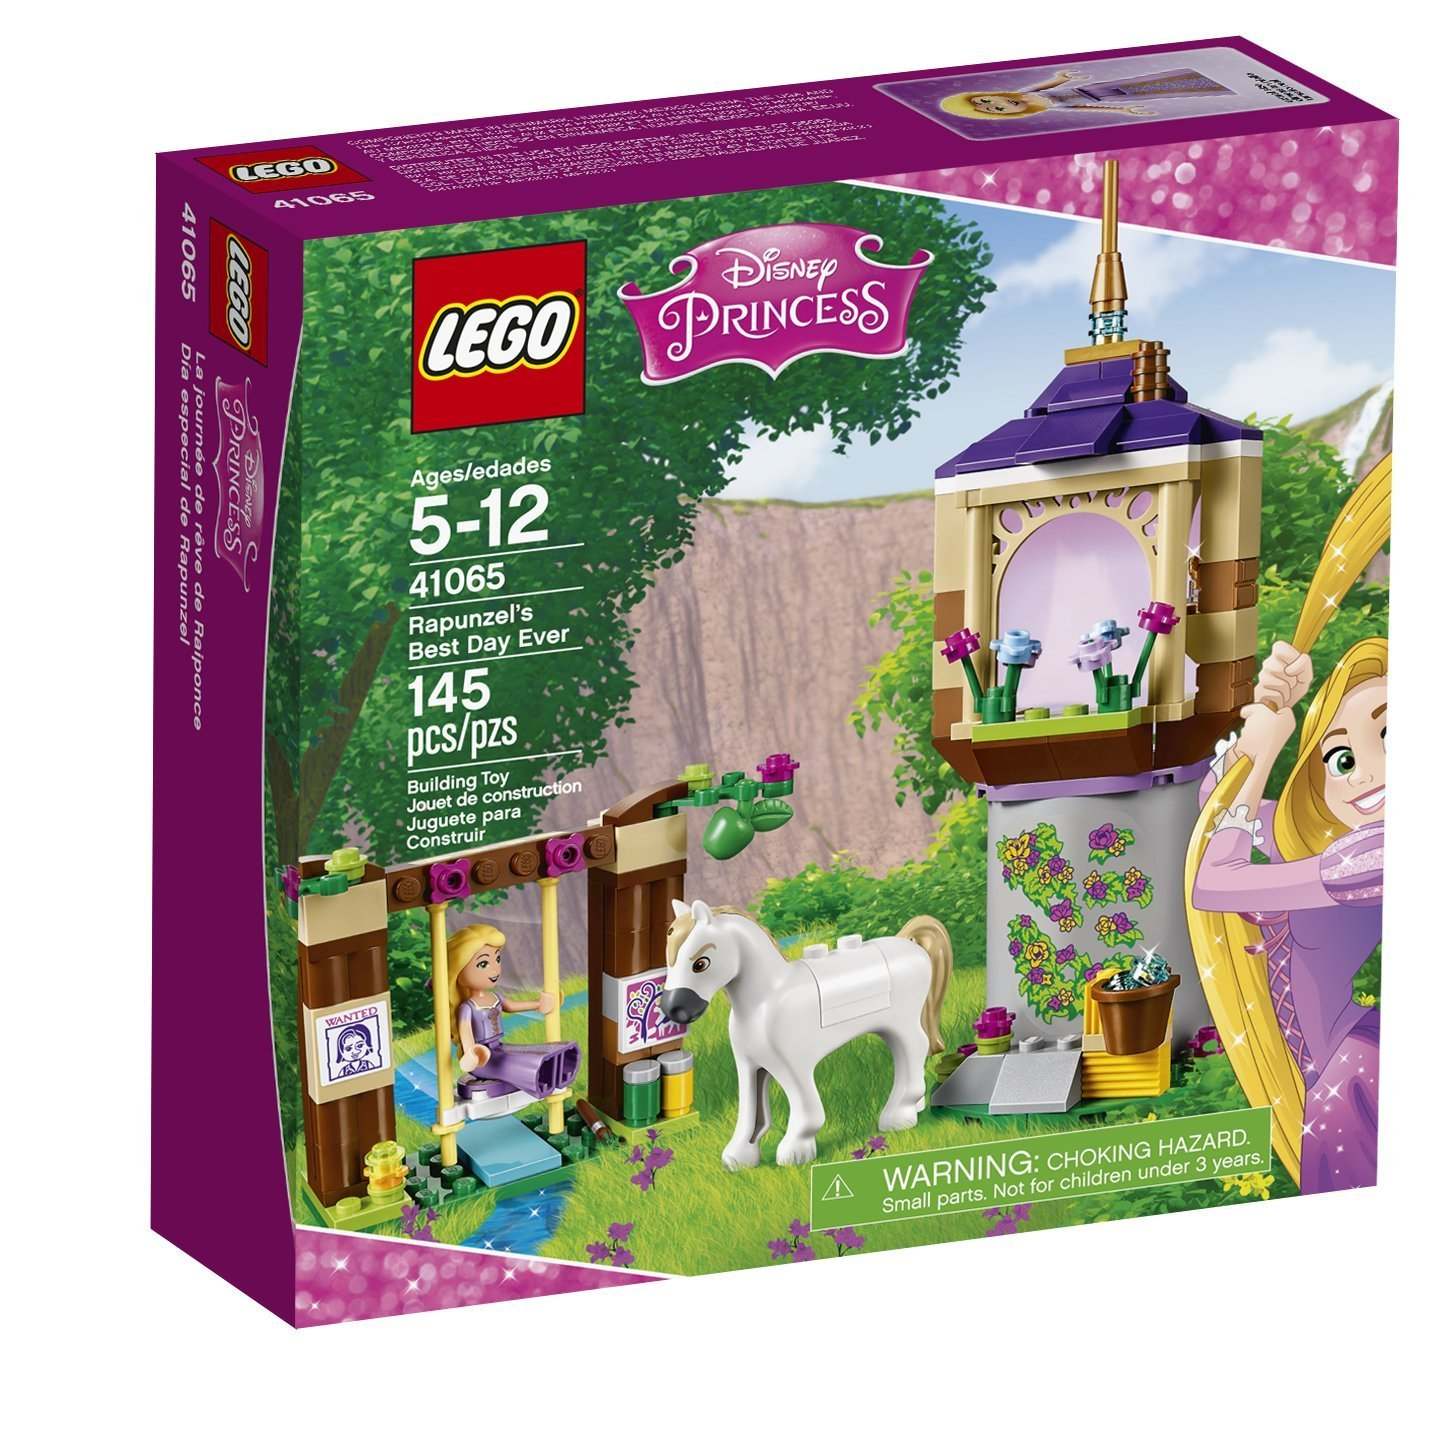 LEGO Disney Princess 41065 Rapunzel’s Best Day Ever Building Kit Only $15.99!